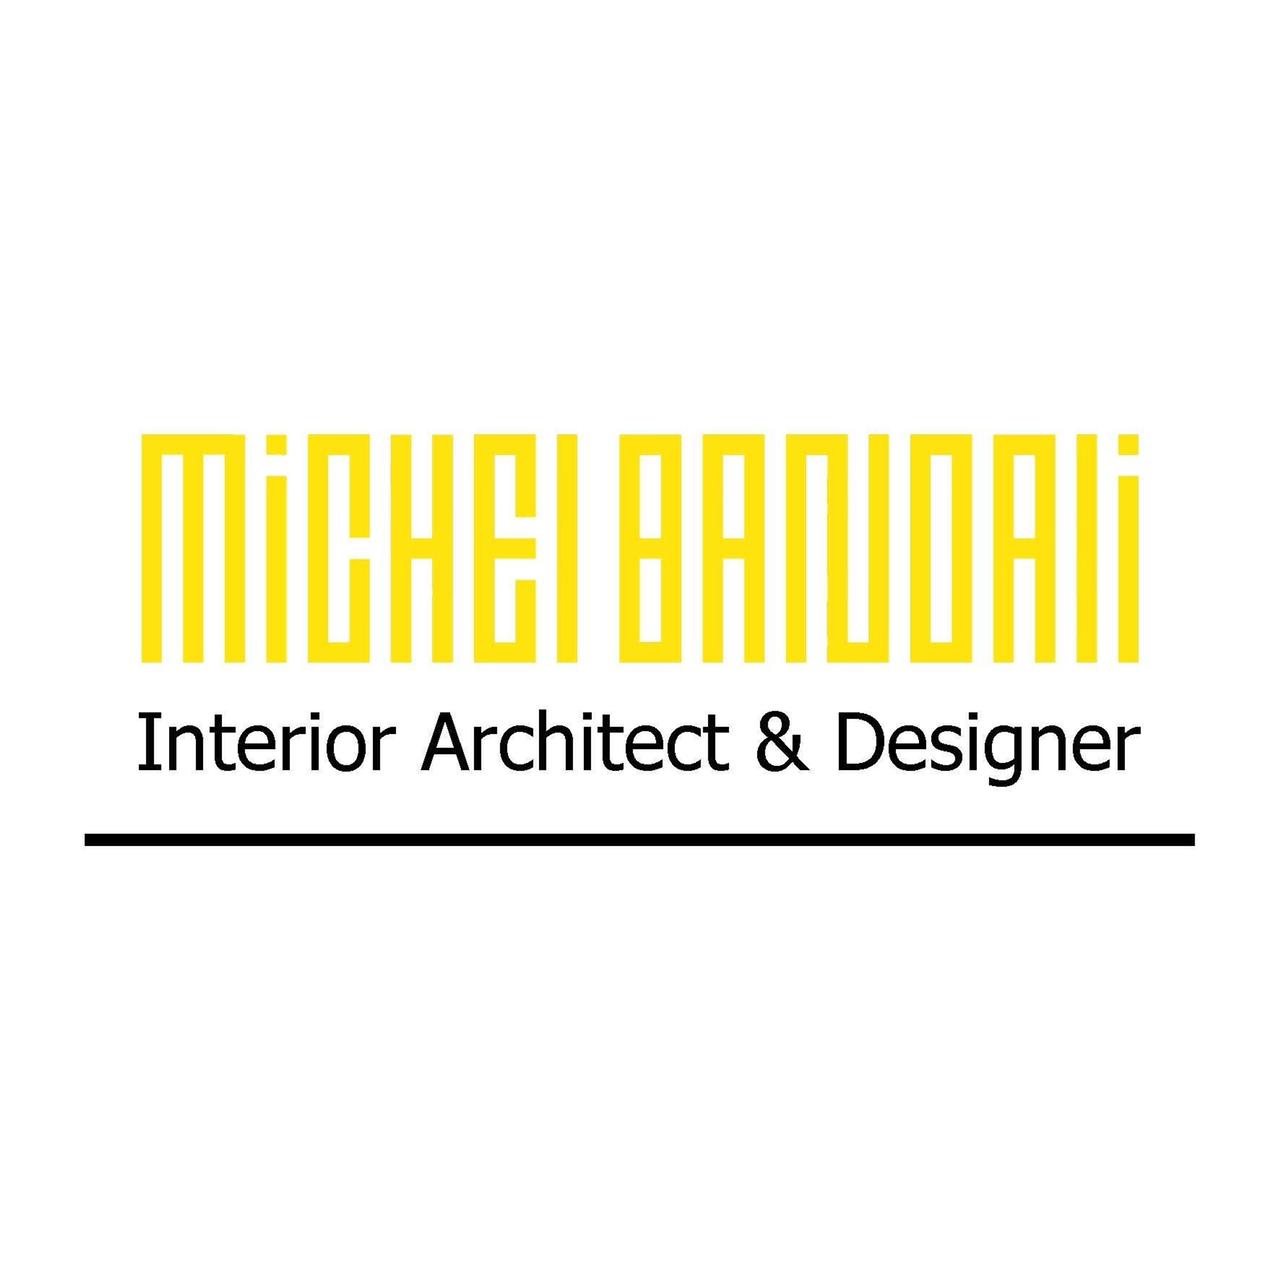 Michel bandali design